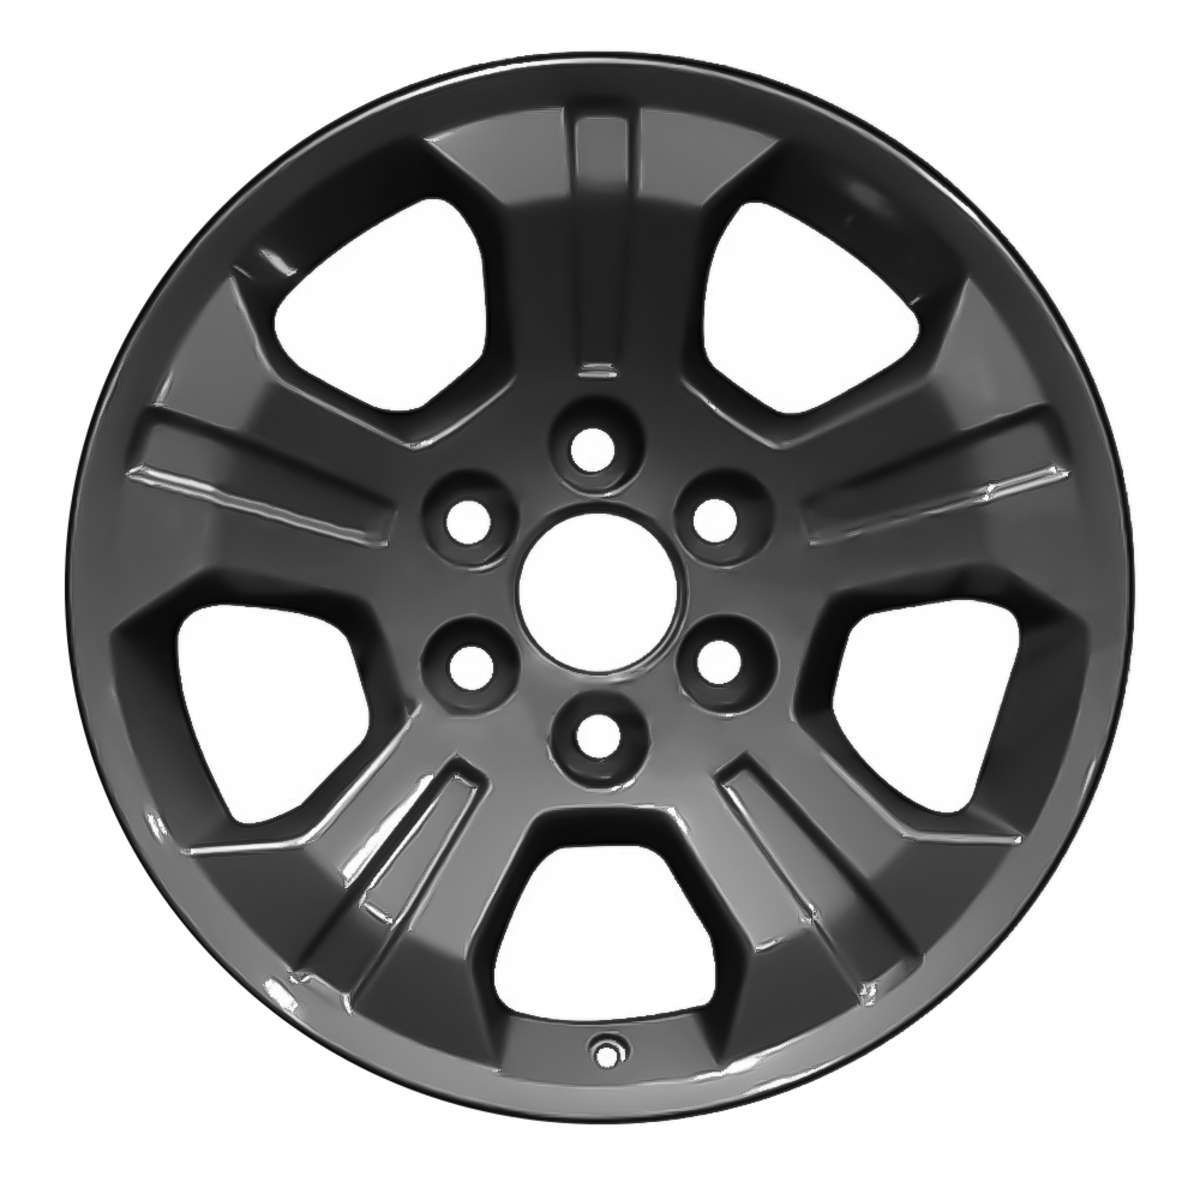 2014 Chevrolet Silverado 1500 18" OEM Wheel Rim W5647H